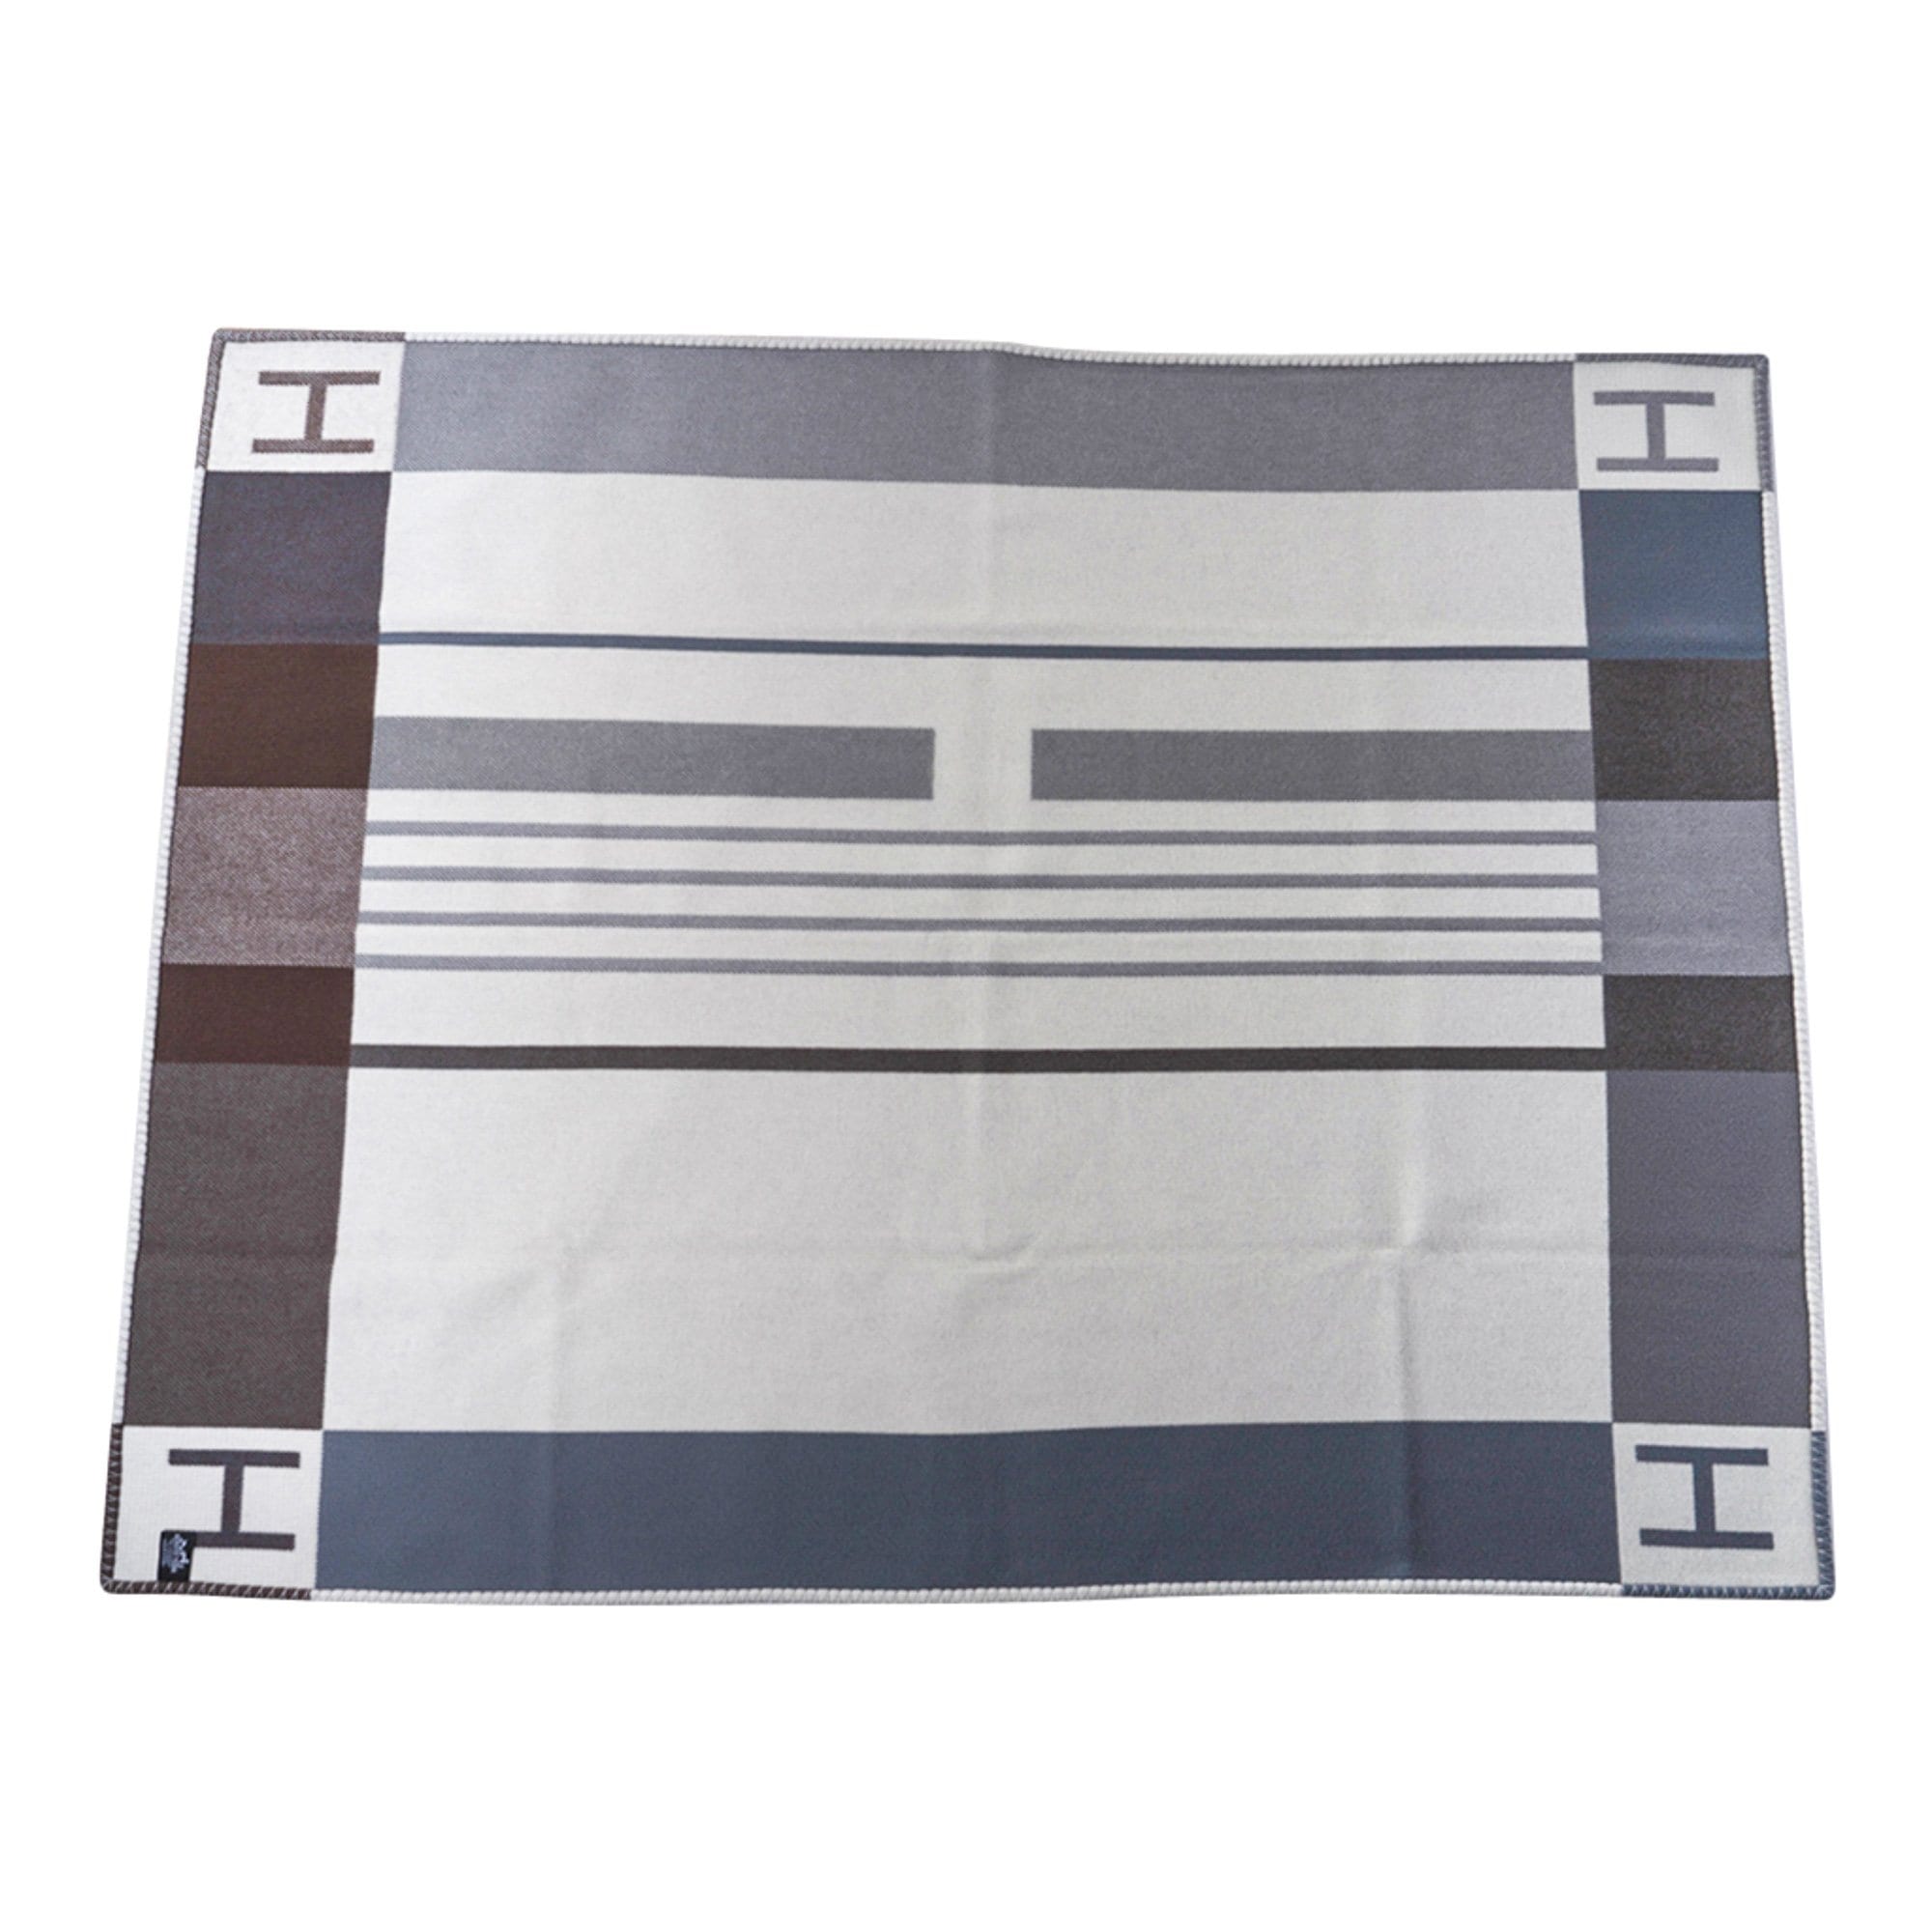 Hermes Avalon Vibration Throw Blanket Gris / Ecru Wool / Cashmere New